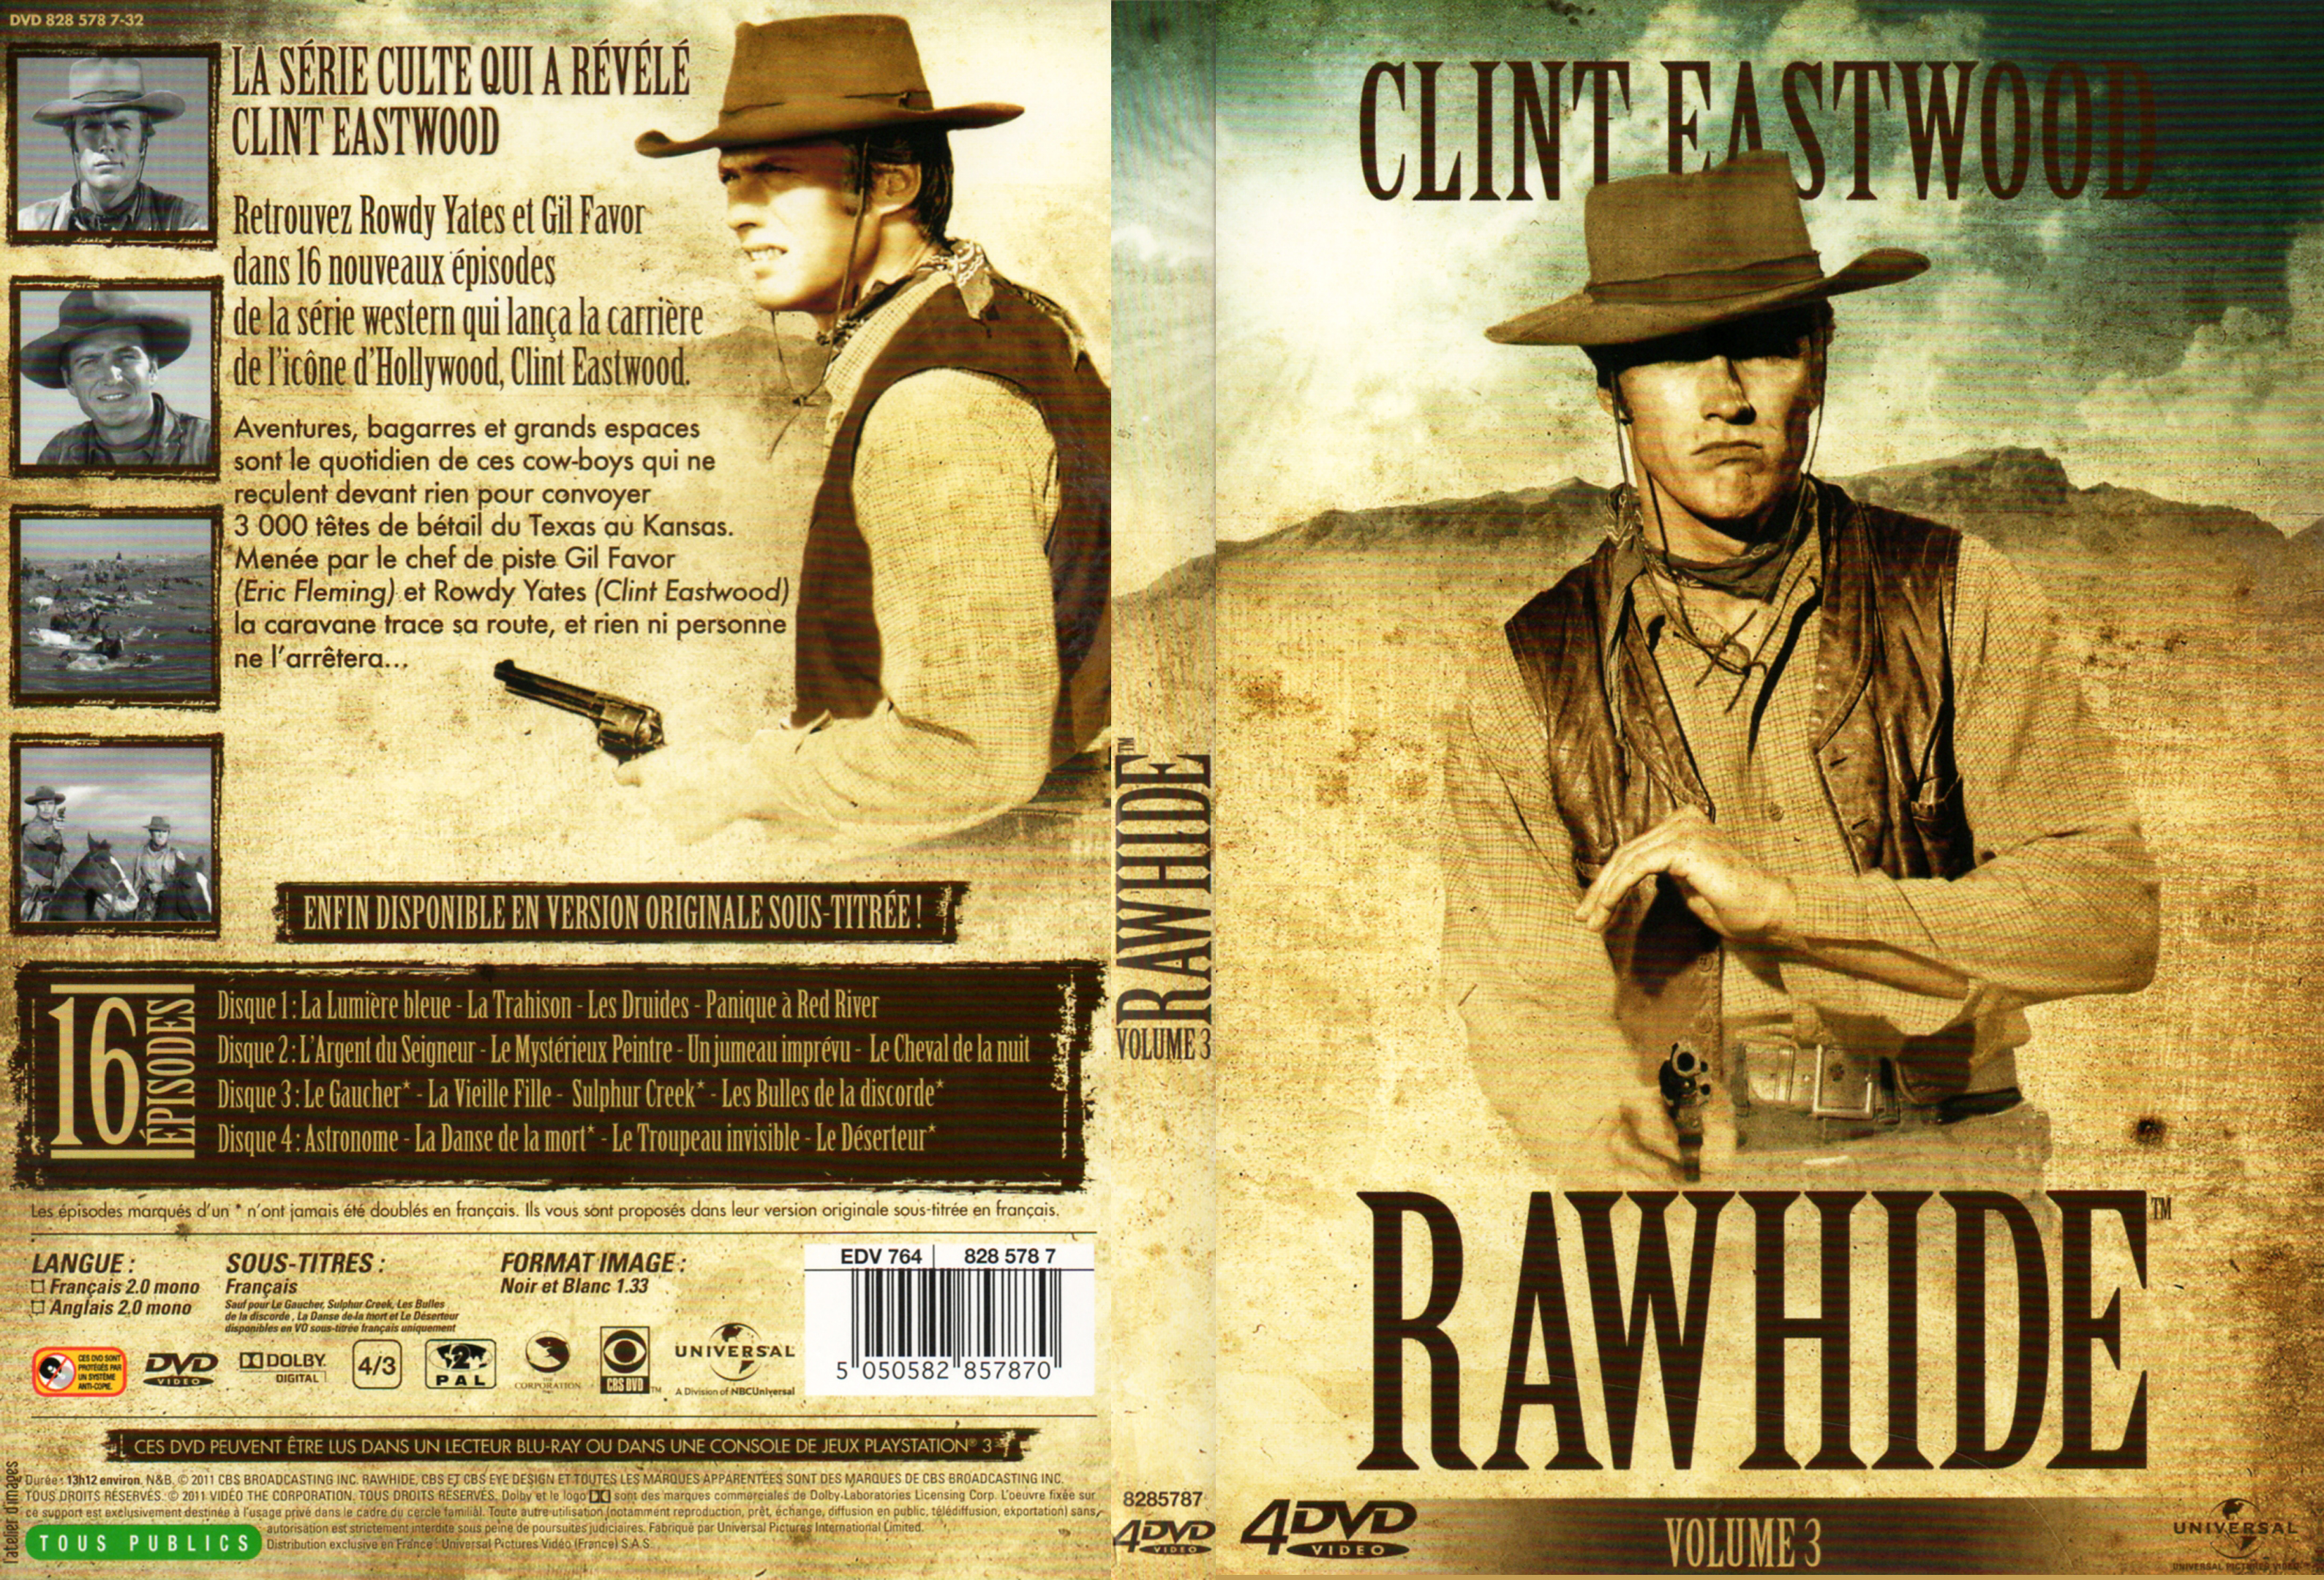 Jaquette DVD Rawhide vol 03